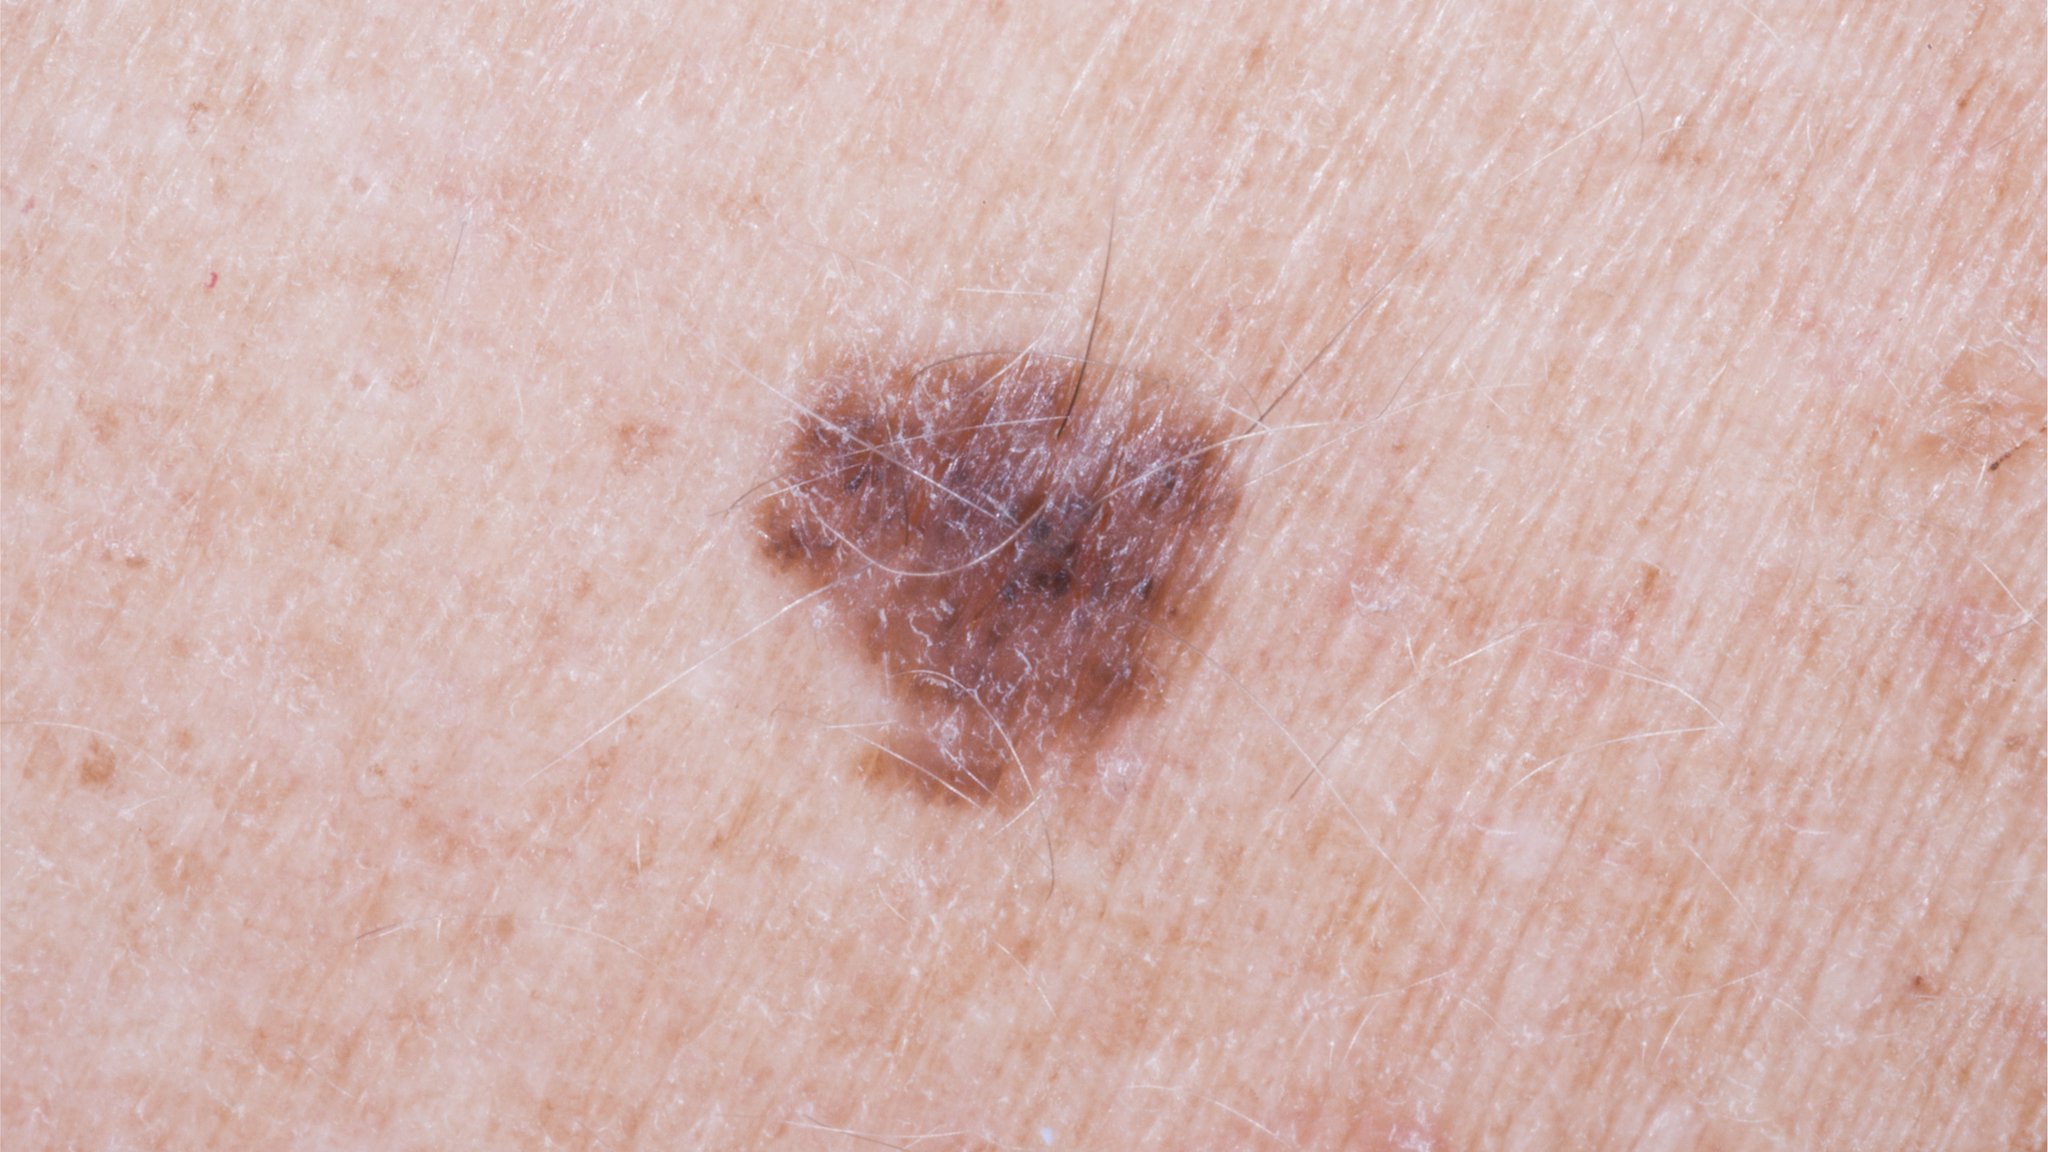 Arm mole count 'predicts skin cancer risk' - BBC News